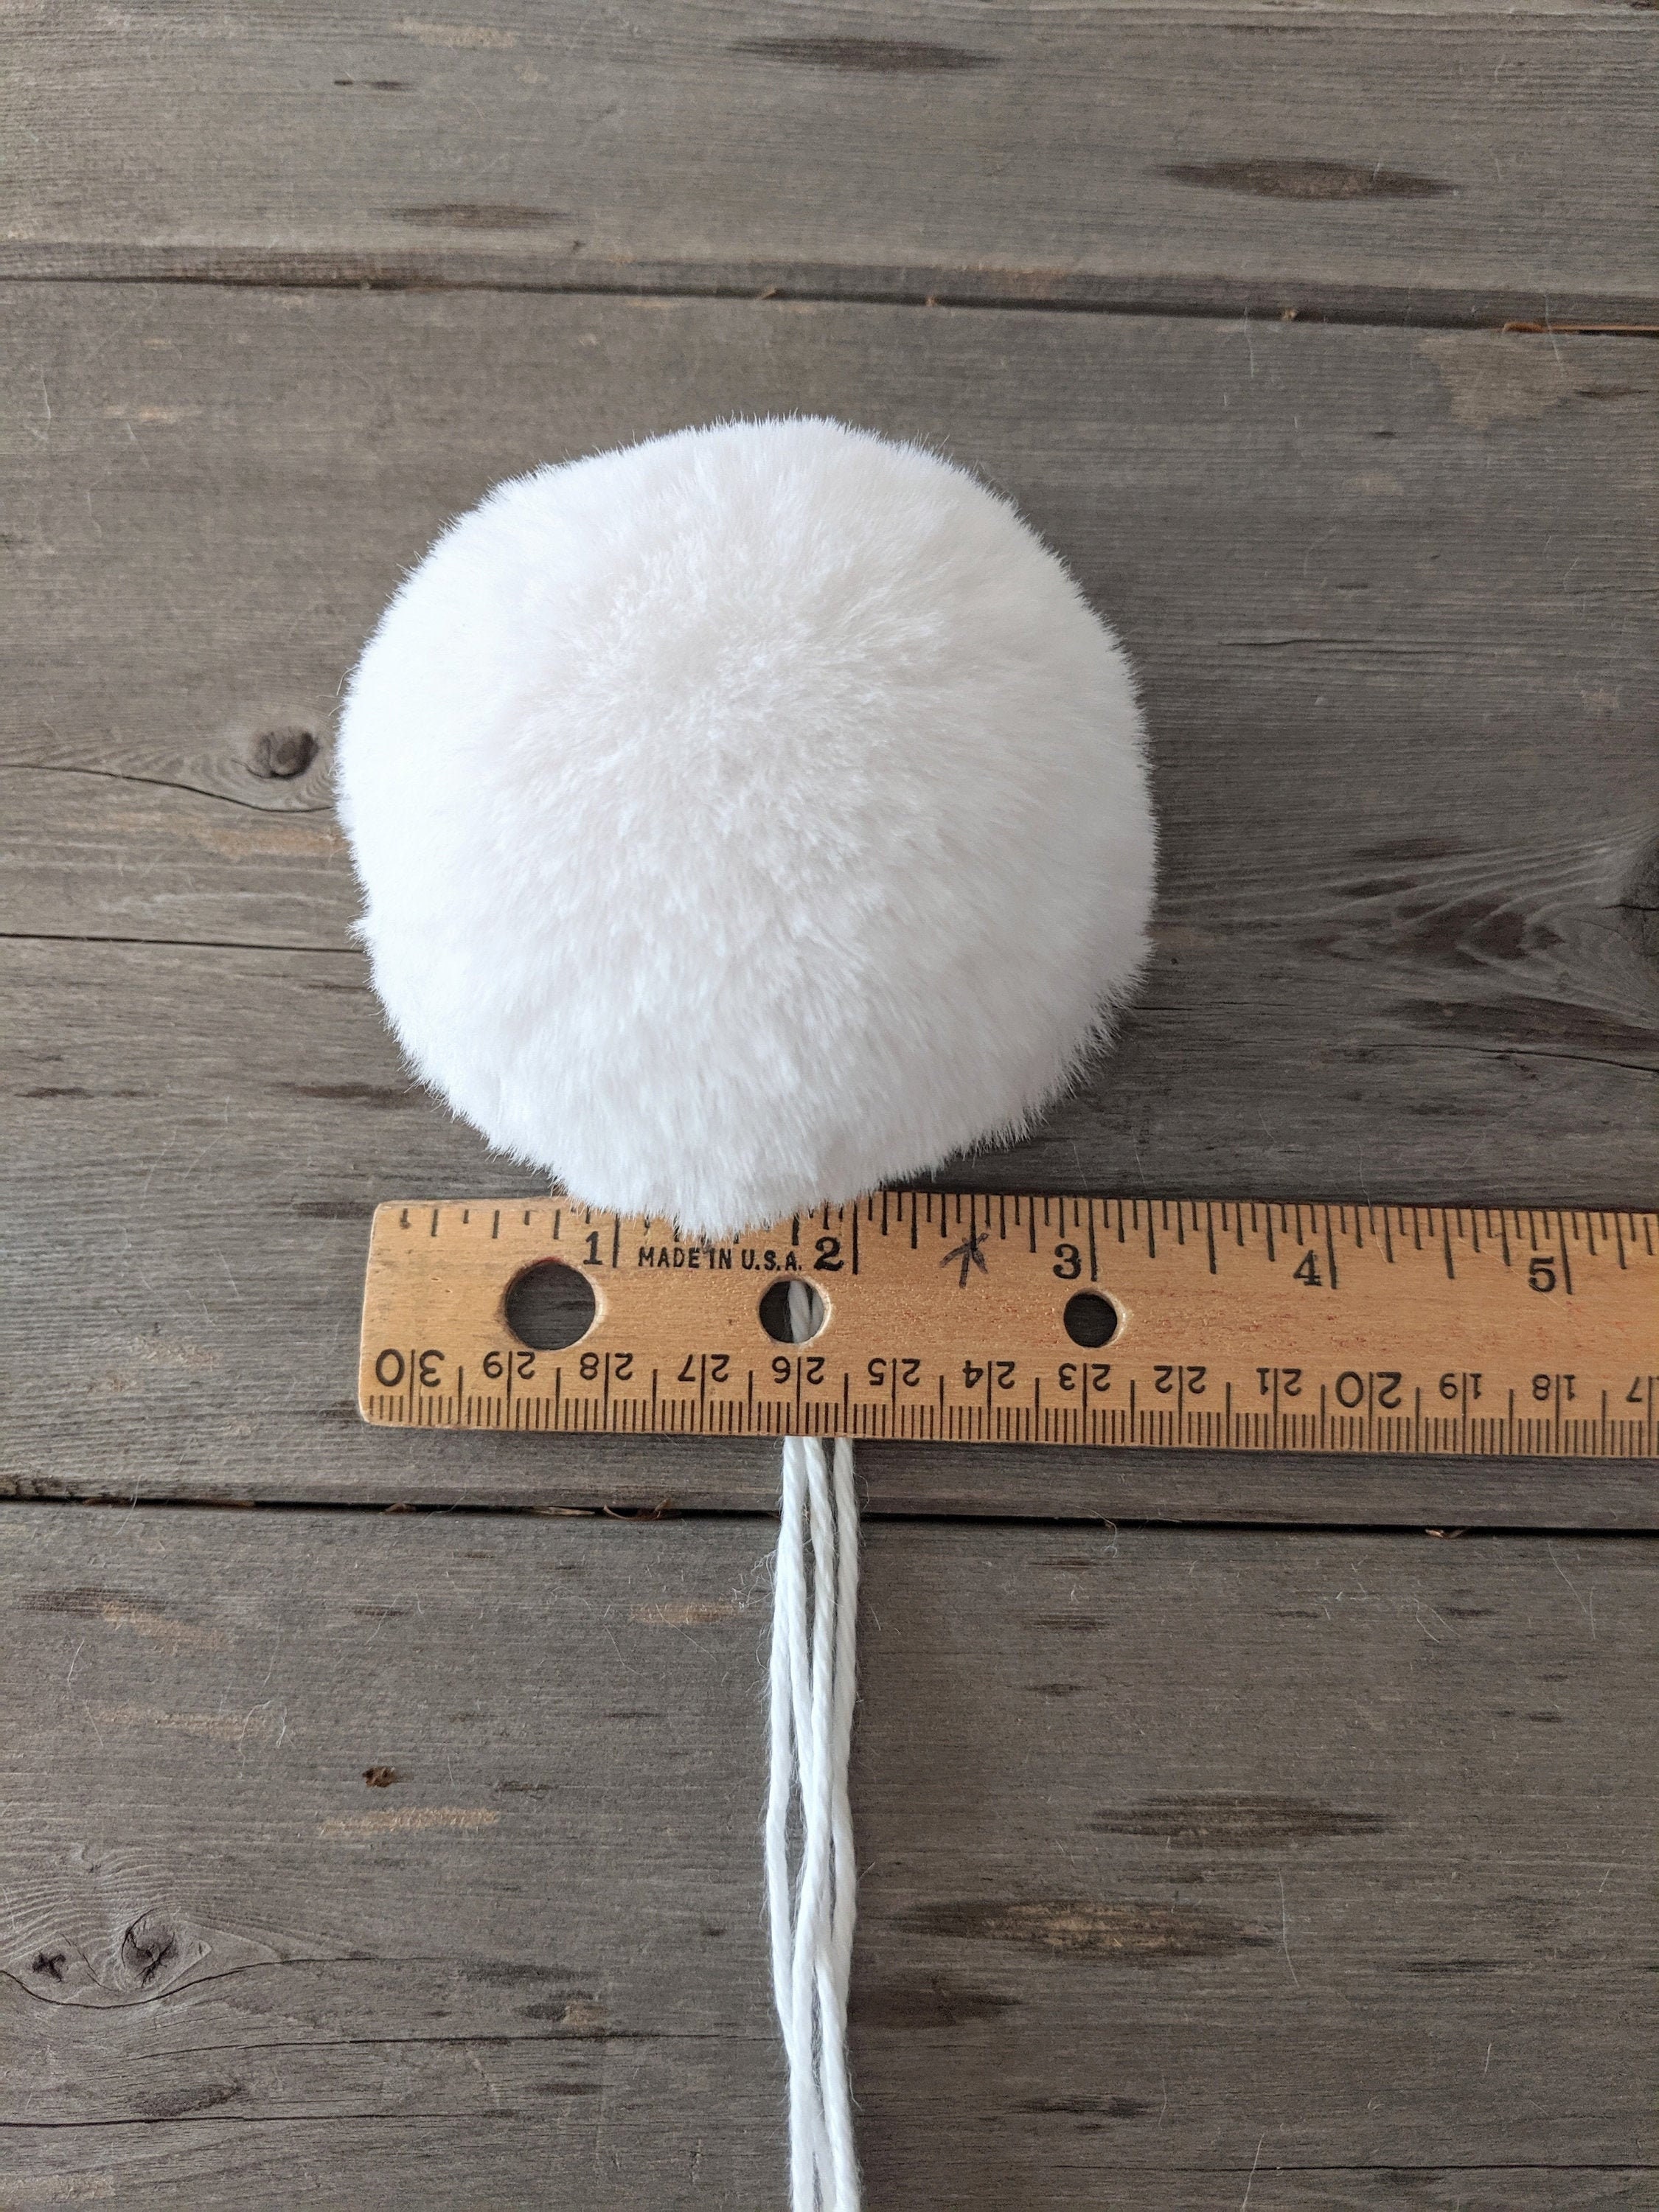 Fake Snowballs Rabbit Tails 3 Inch White Pom-poms 4 Pieces/pkg. nm40000773  